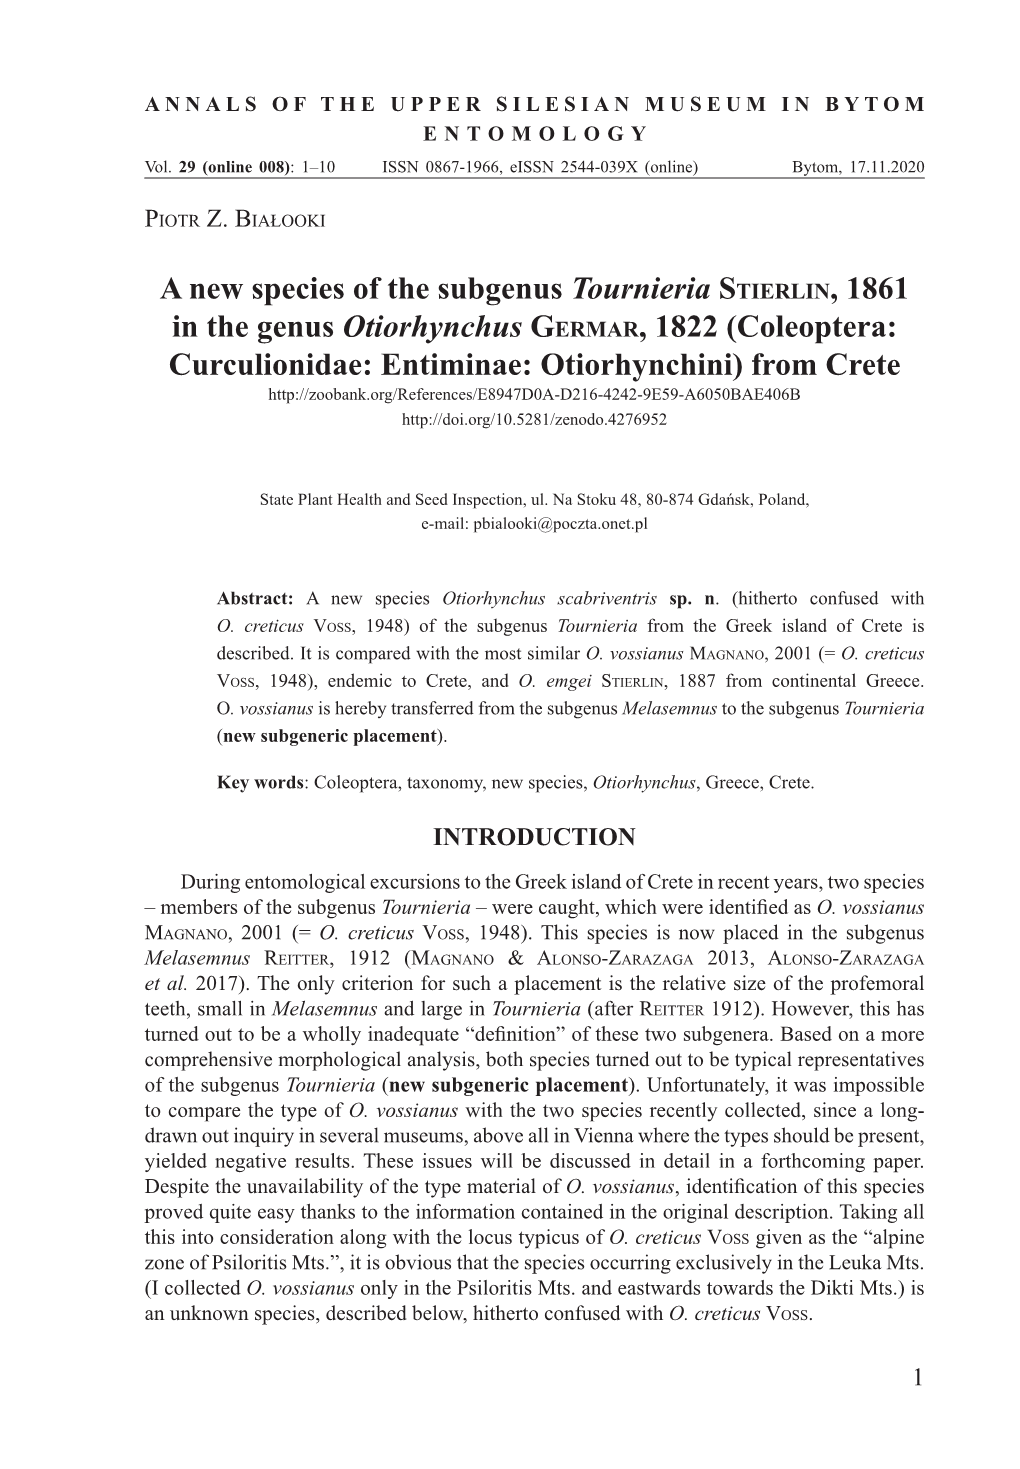 A New Species of the Subgenus Tournieria Stierlin, 1861 in The